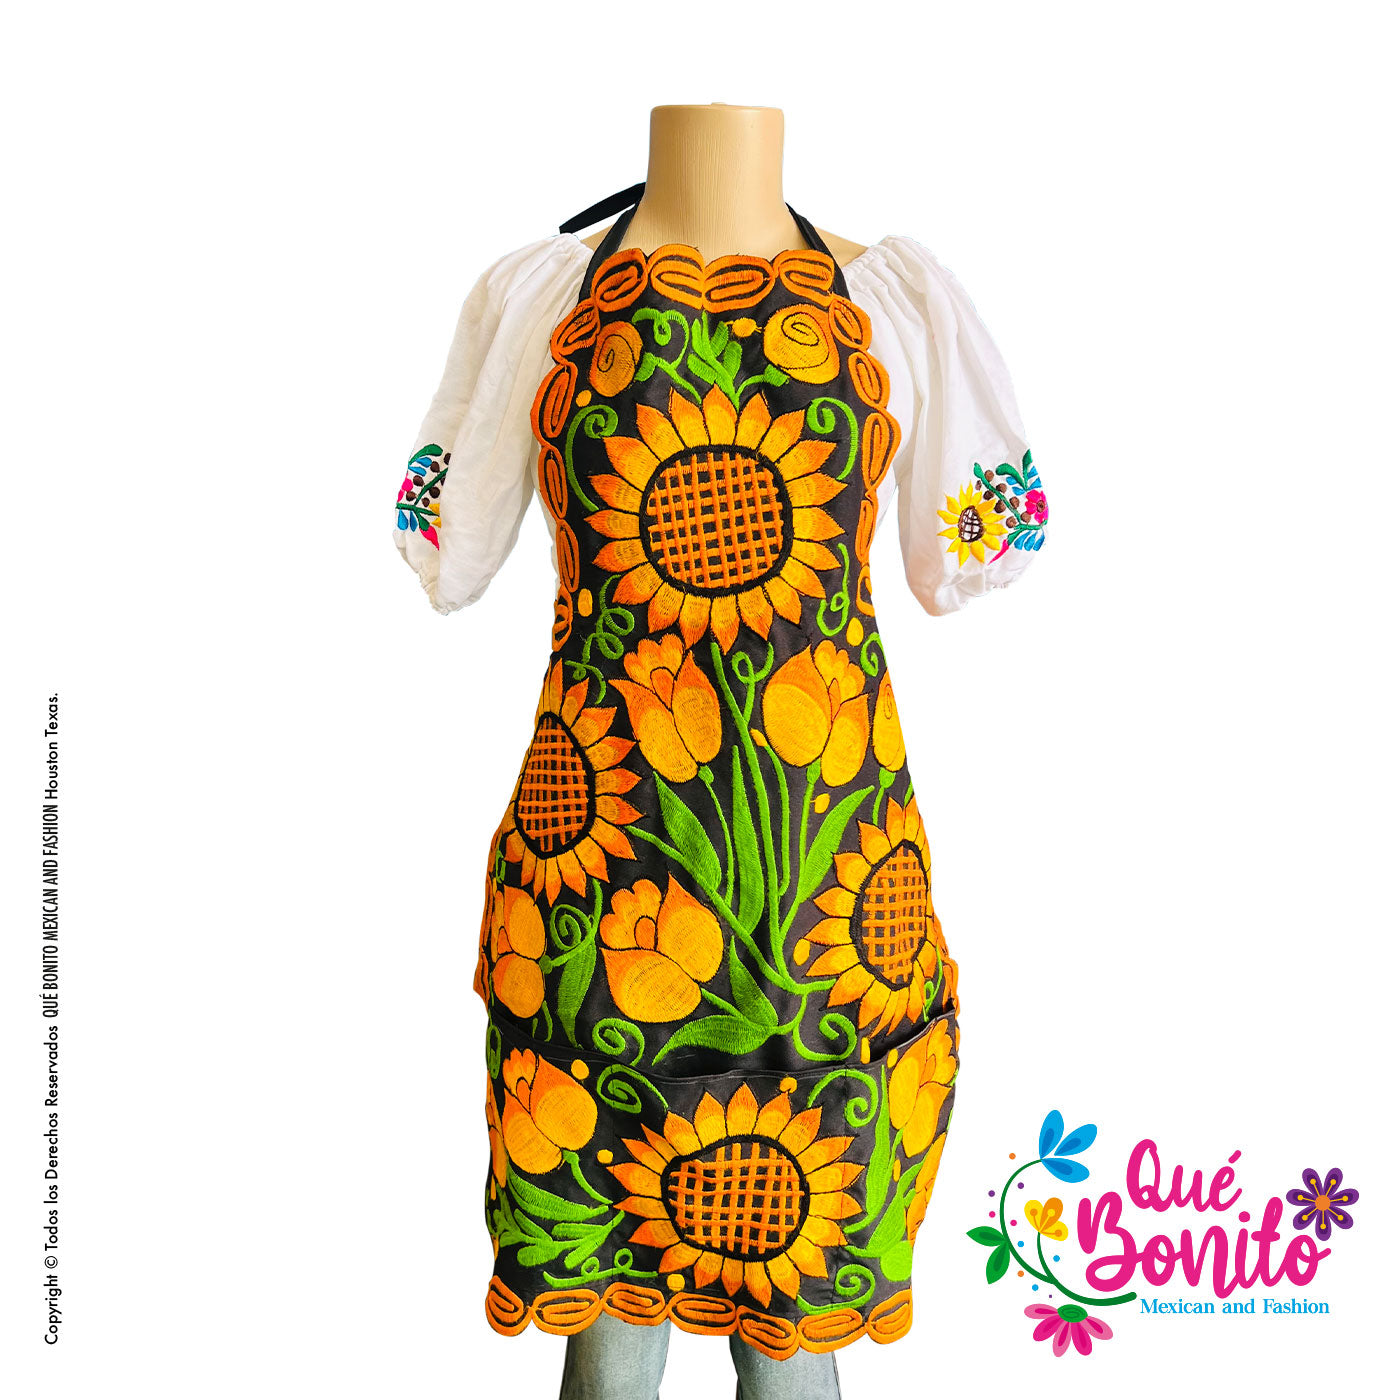 Sunflower Apron Que Bonito Mexican and Fashion